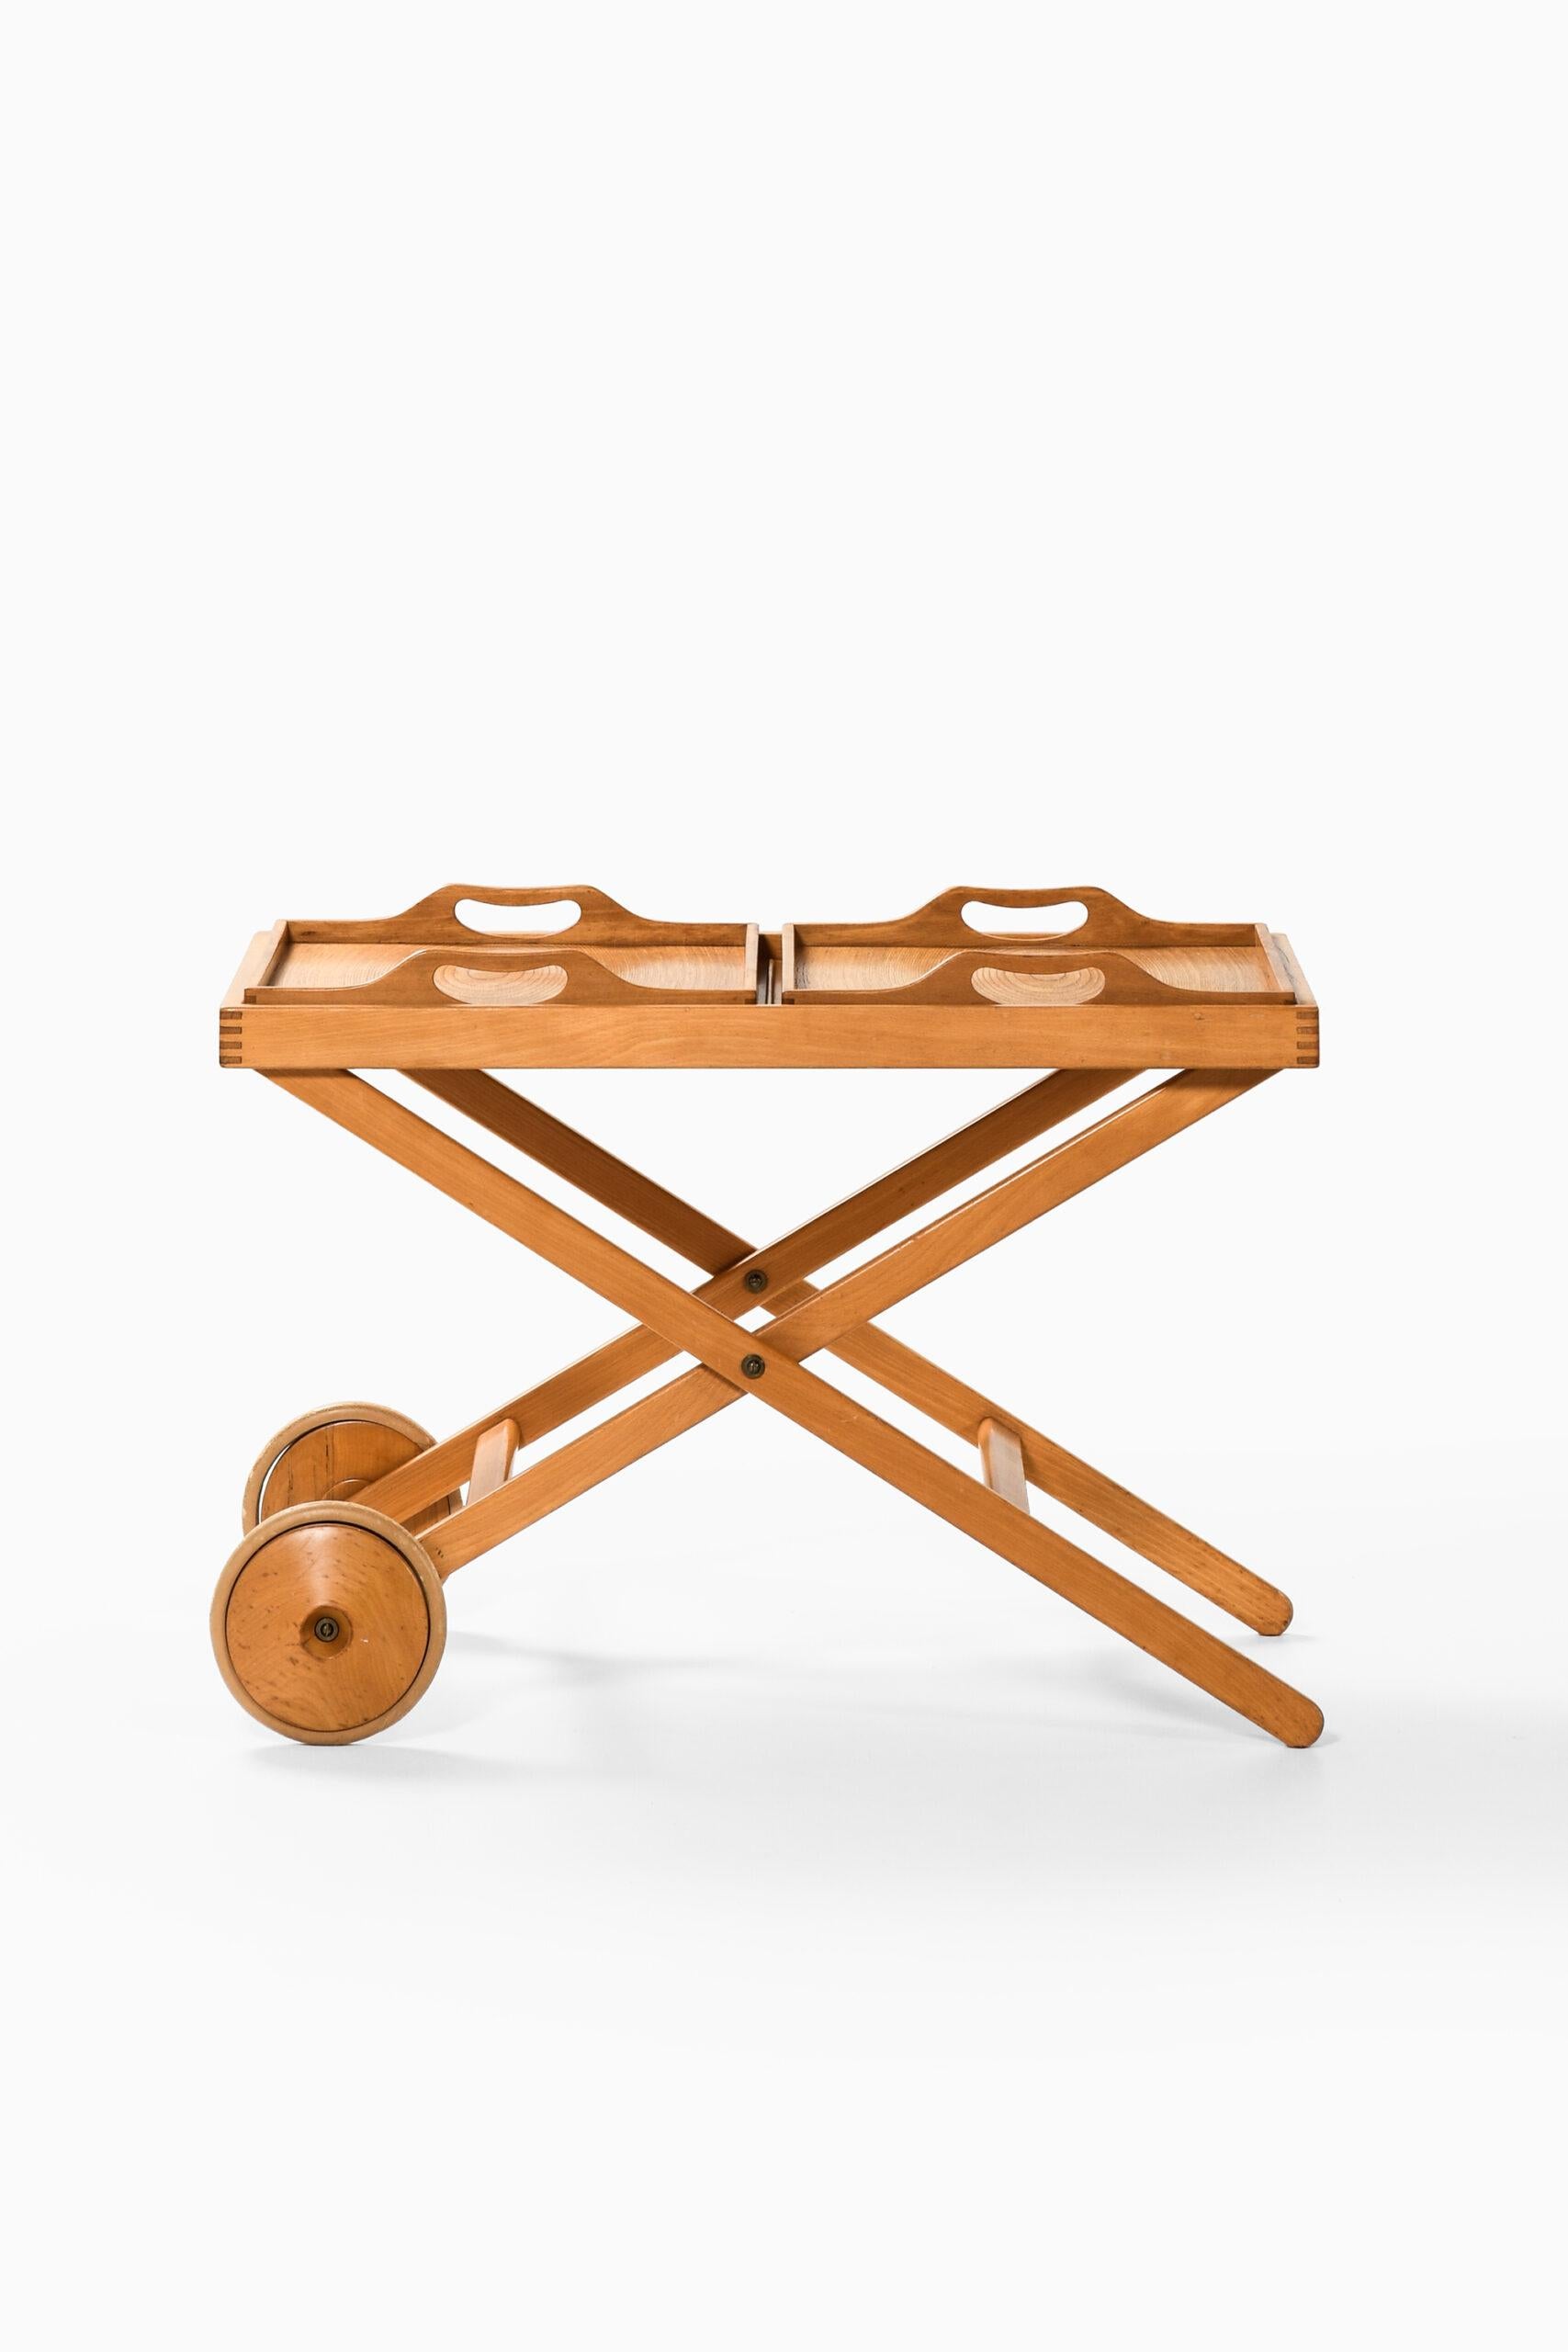 Rare trolley / tray table designed by Tapio Wirkkala & Aulis Leinonen. Produced by ASKO in Finland.